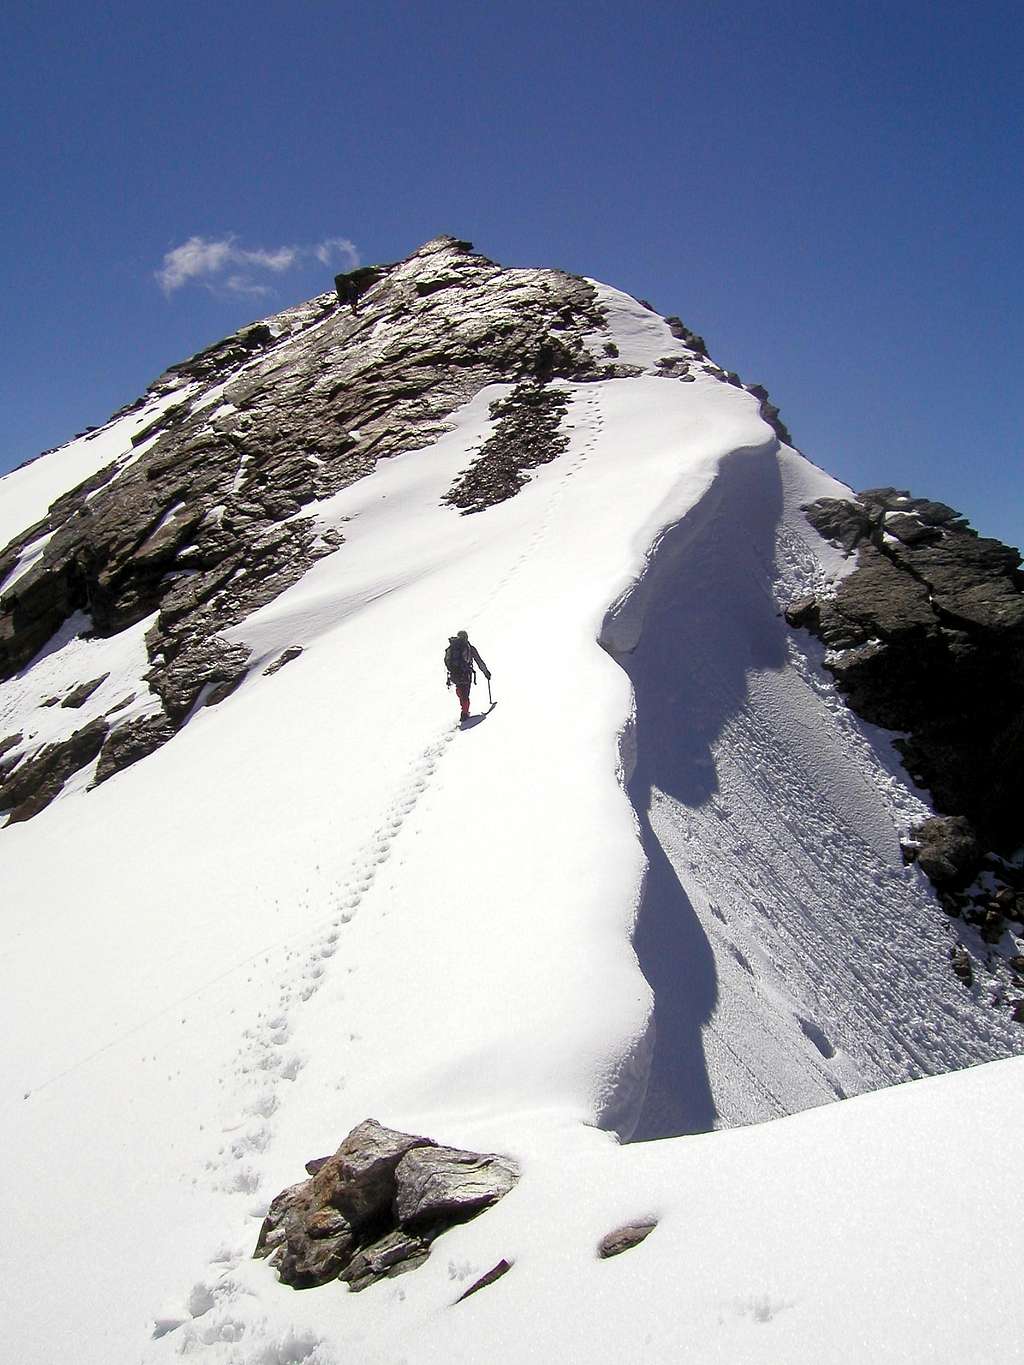 Climbing the ridge Monte Nevoso - Monte Magro